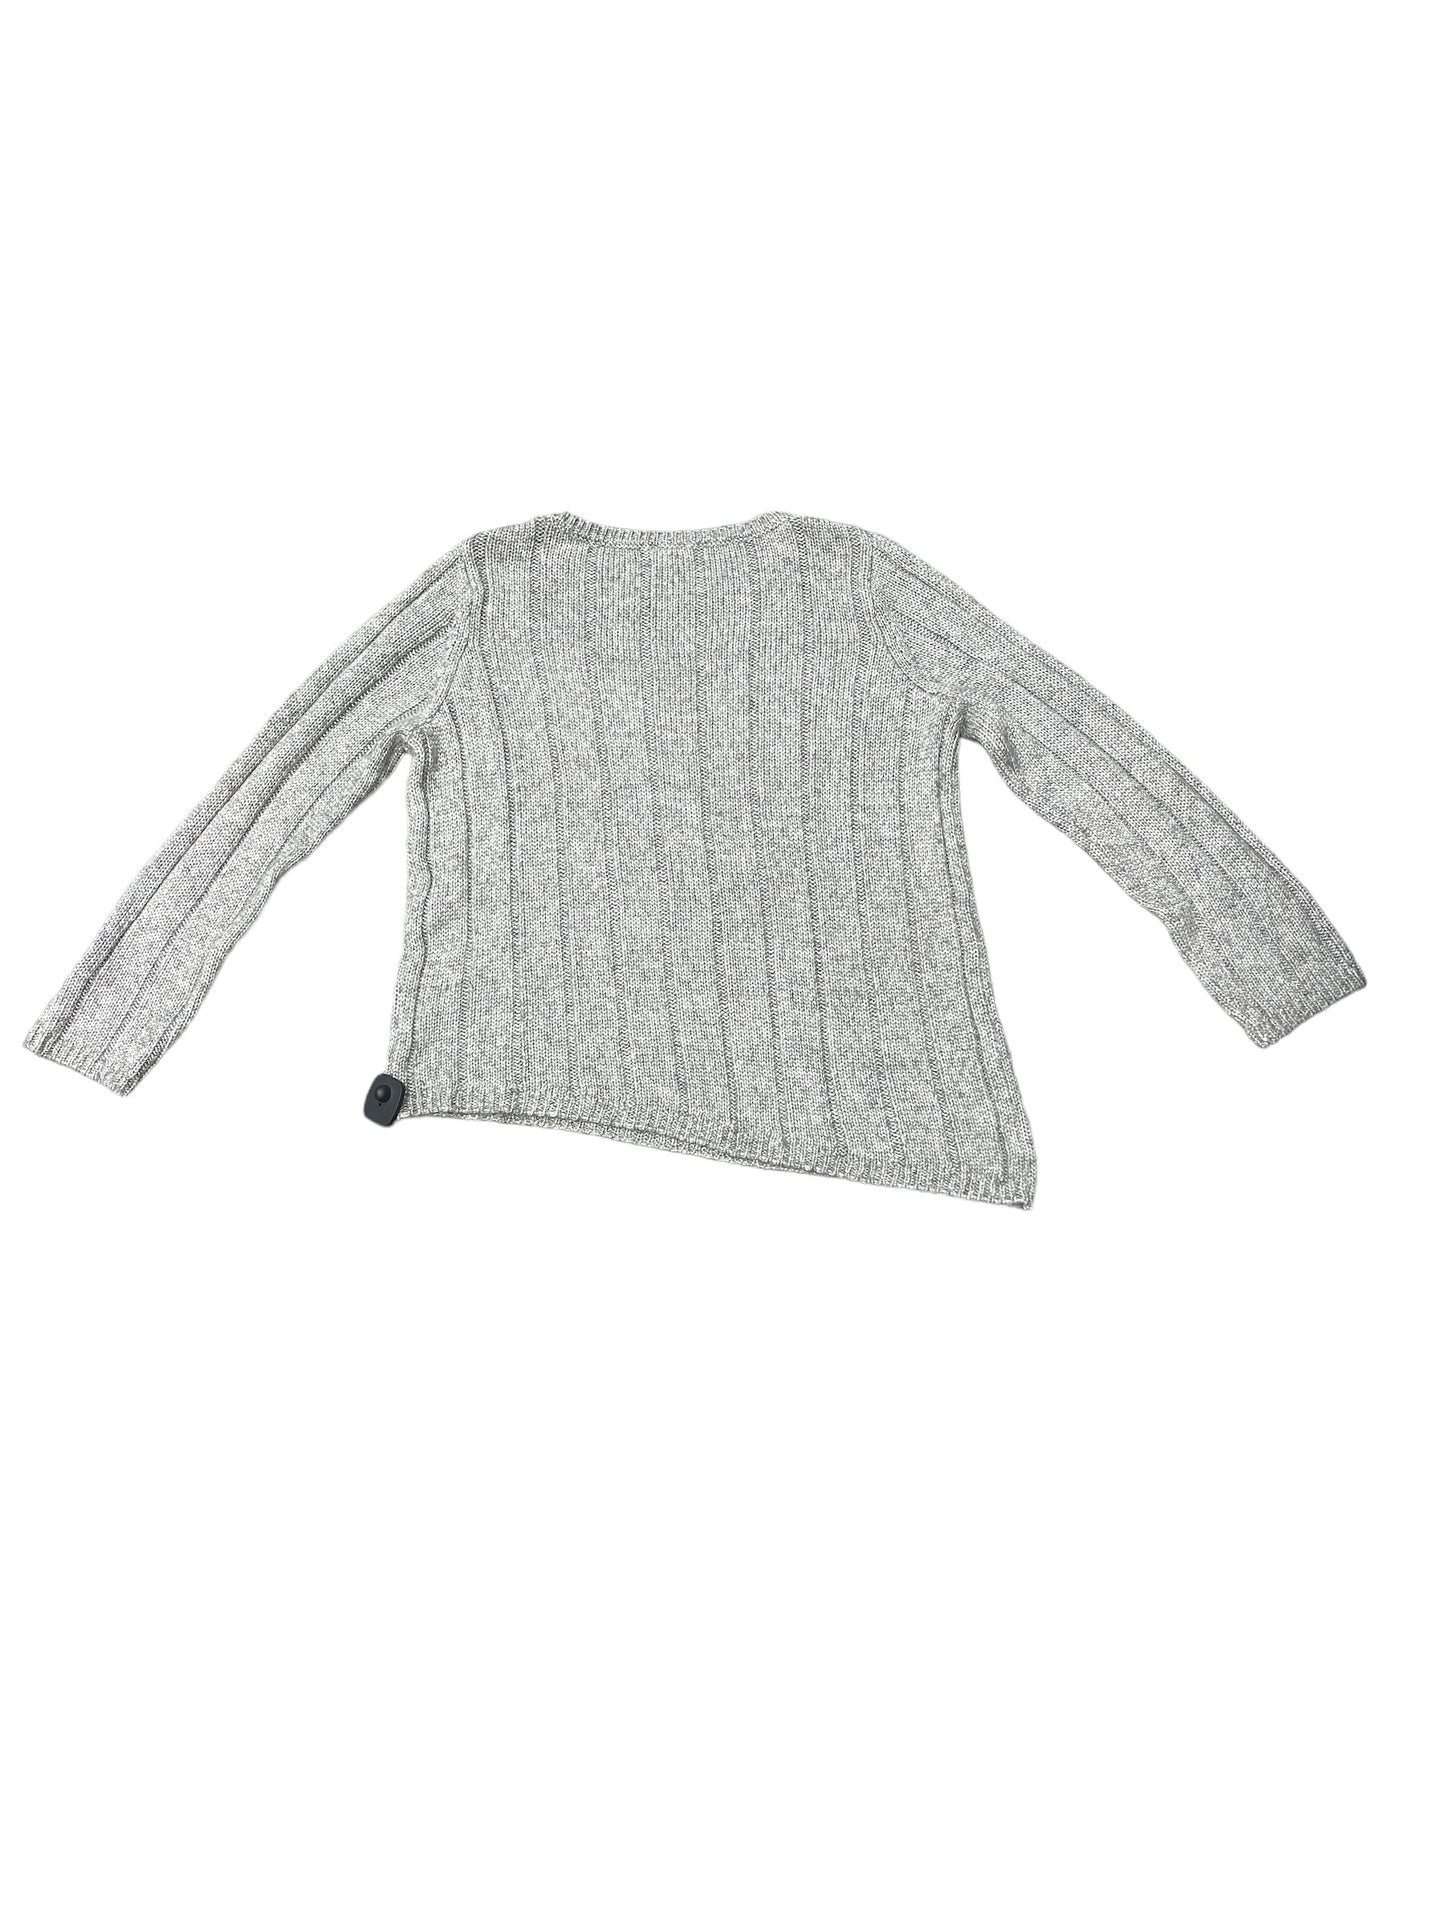 Sweater By Jones New York  Size: Xl